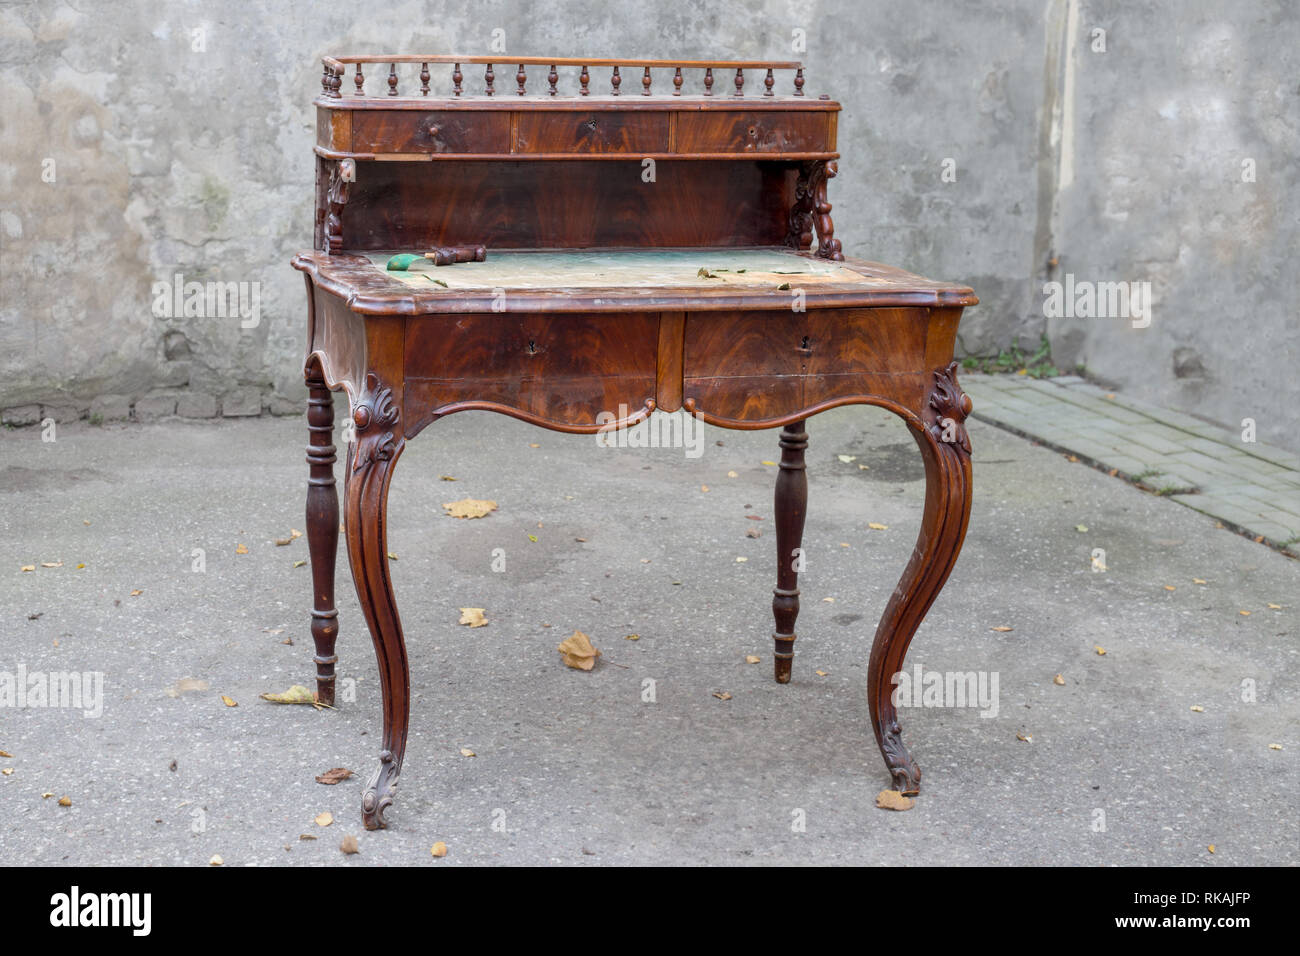 Antique mahogany writing desk with ornate carving, damaged Stock Photo